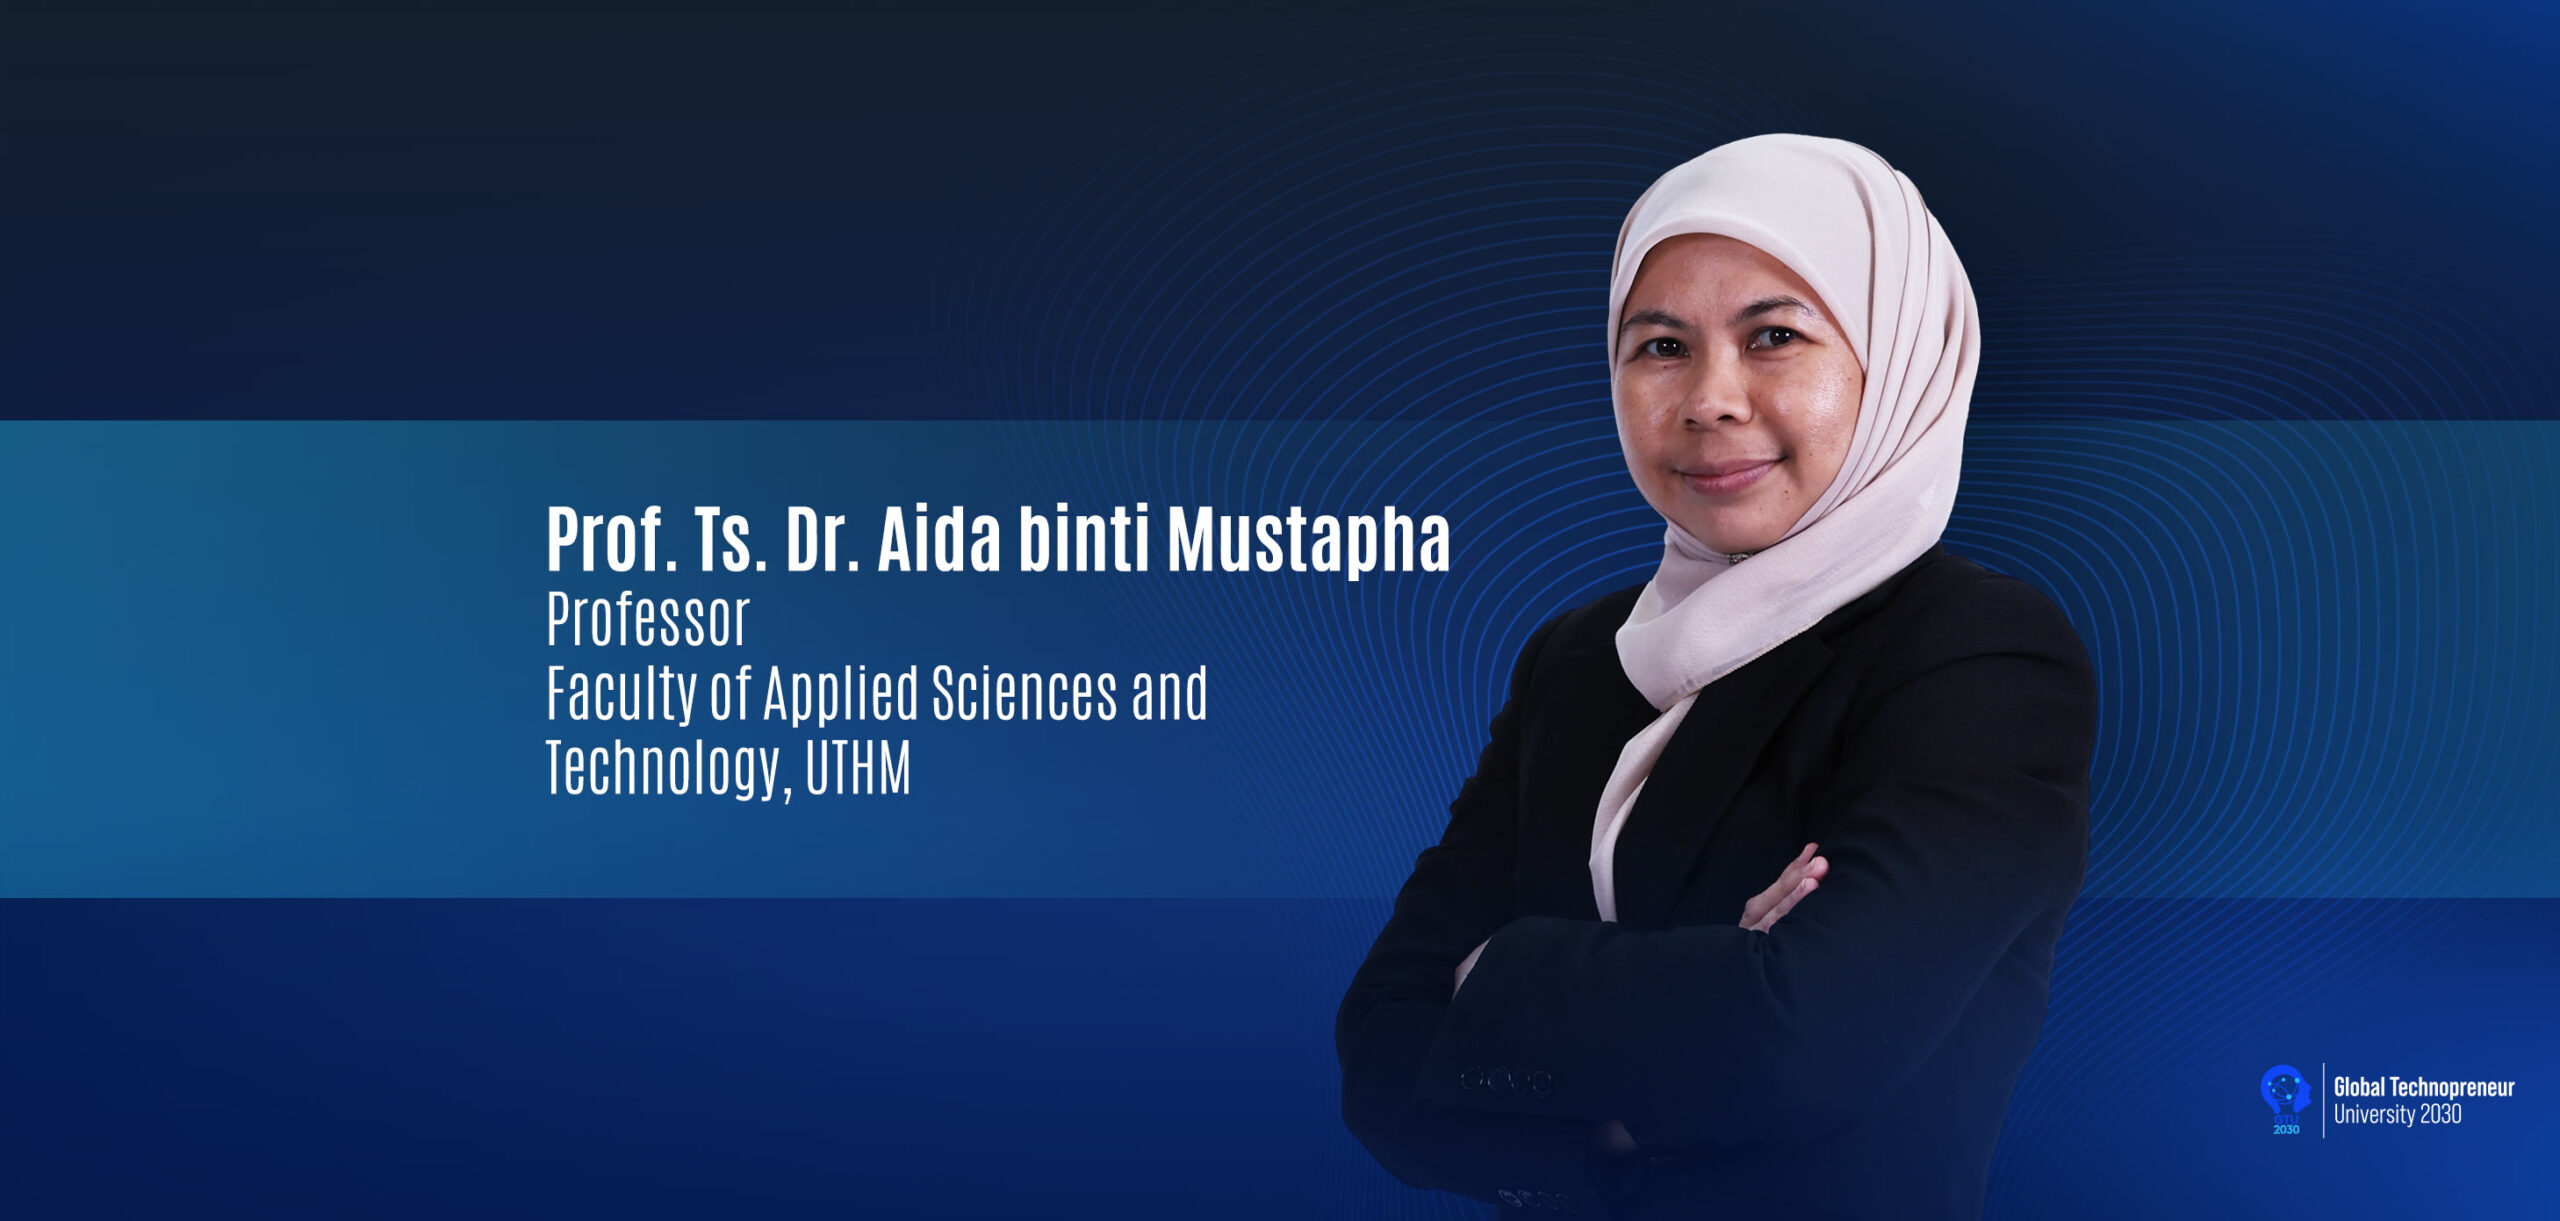 UTHM Expert: Professor Ts. Dr. Aida Mustapha